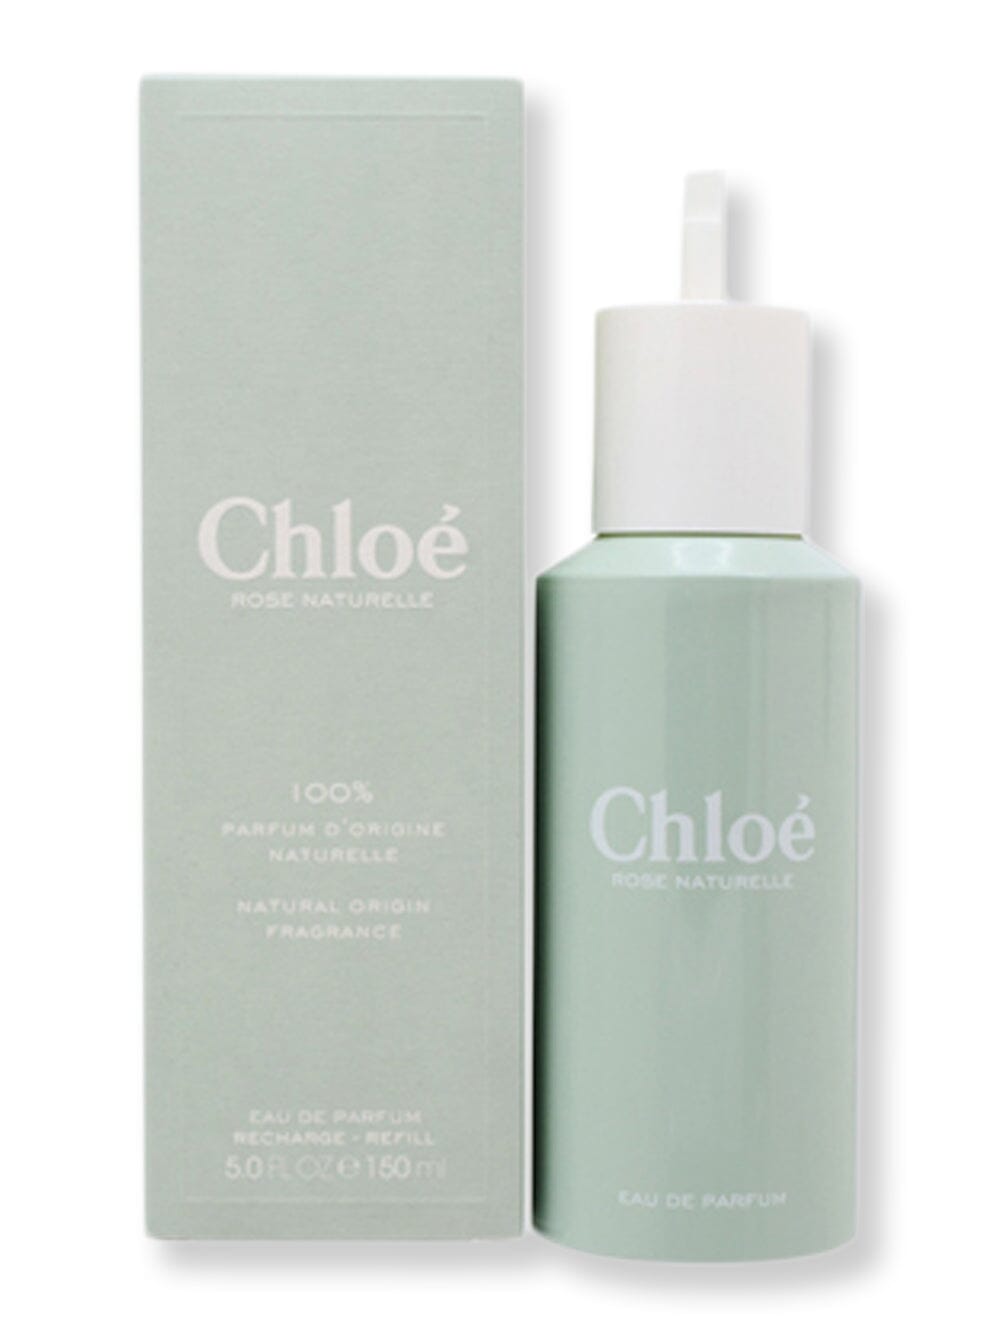 Chloe Chloe Rose Naturelle EDP Refill 5 oz150 ml Perfume 